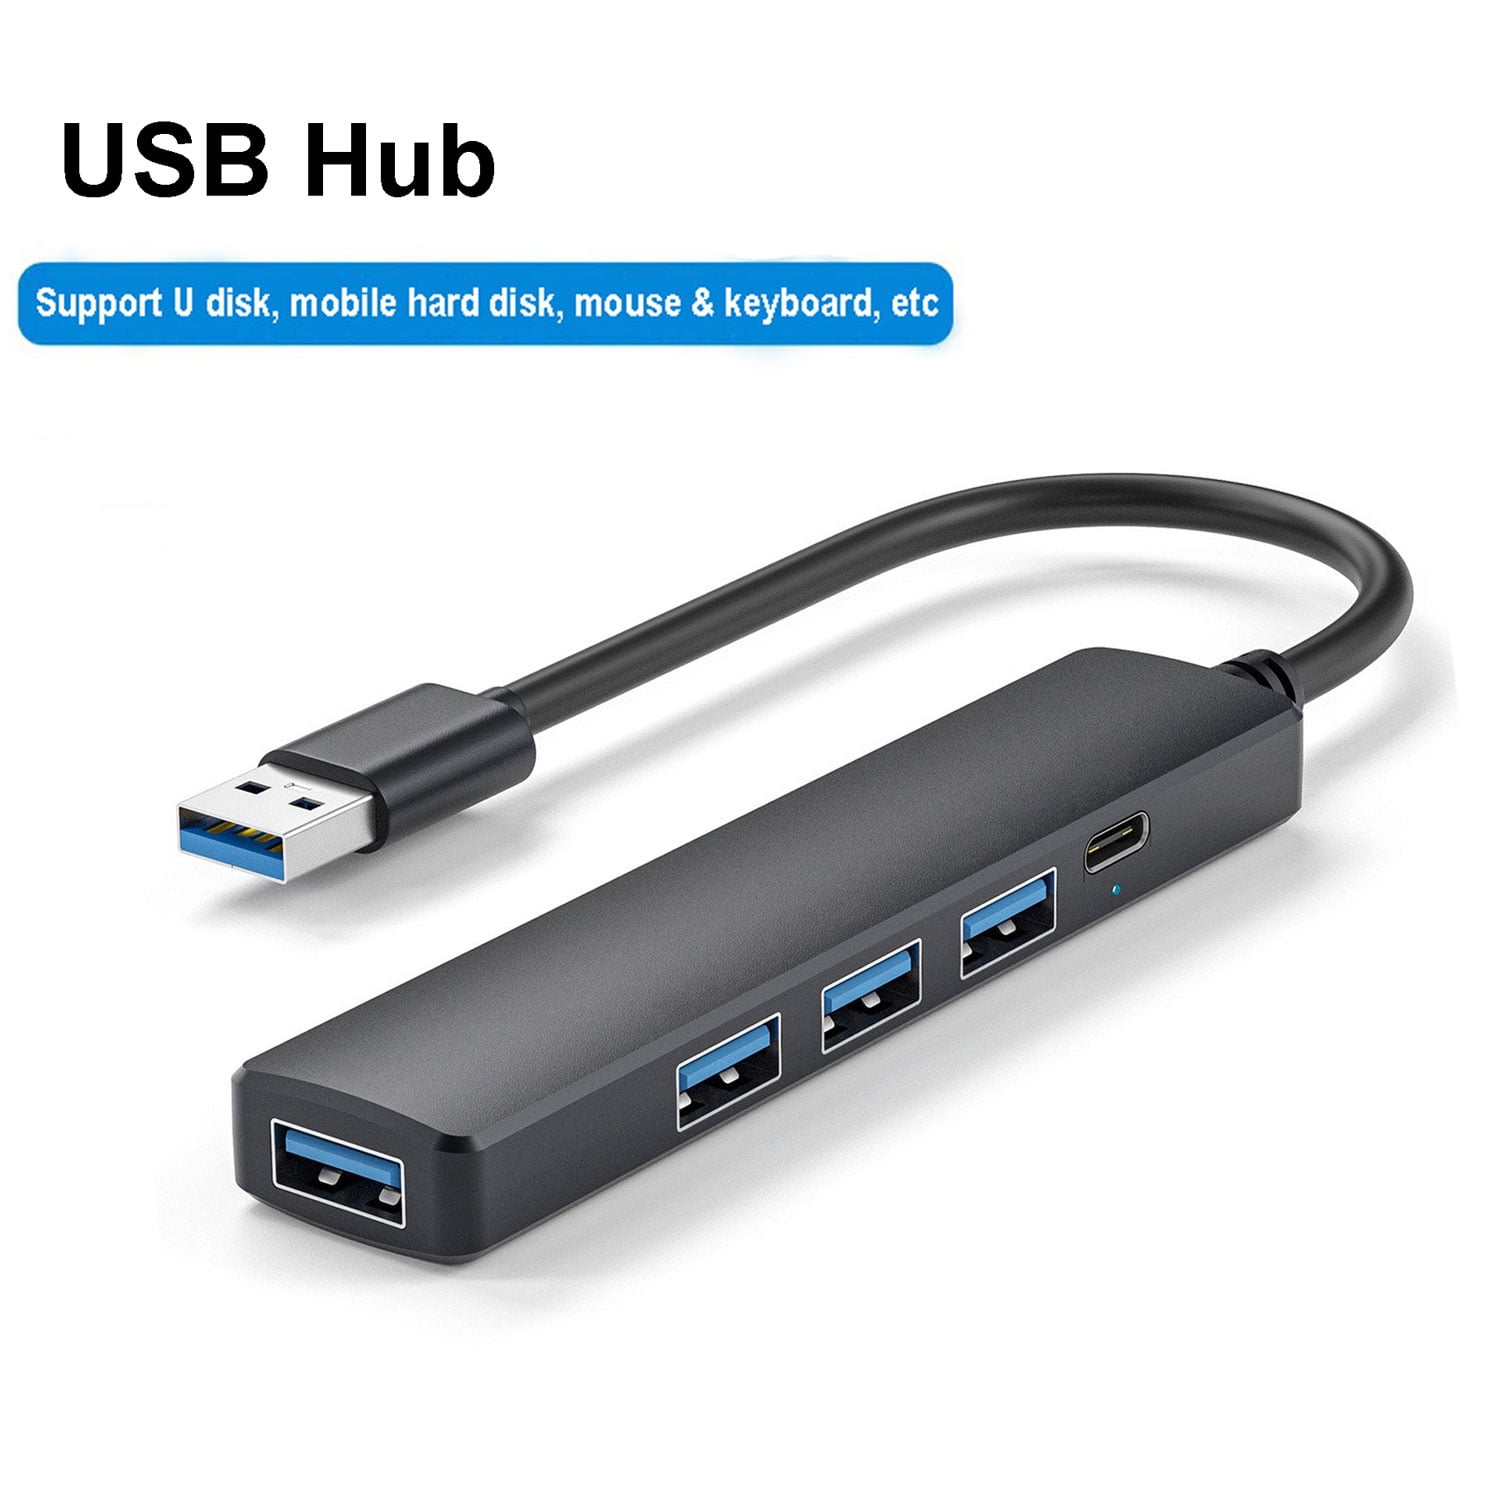 BENFEI USB 3.0 Hub 4-Port, Ultra-Slim USB Hub with 3 ft Extended